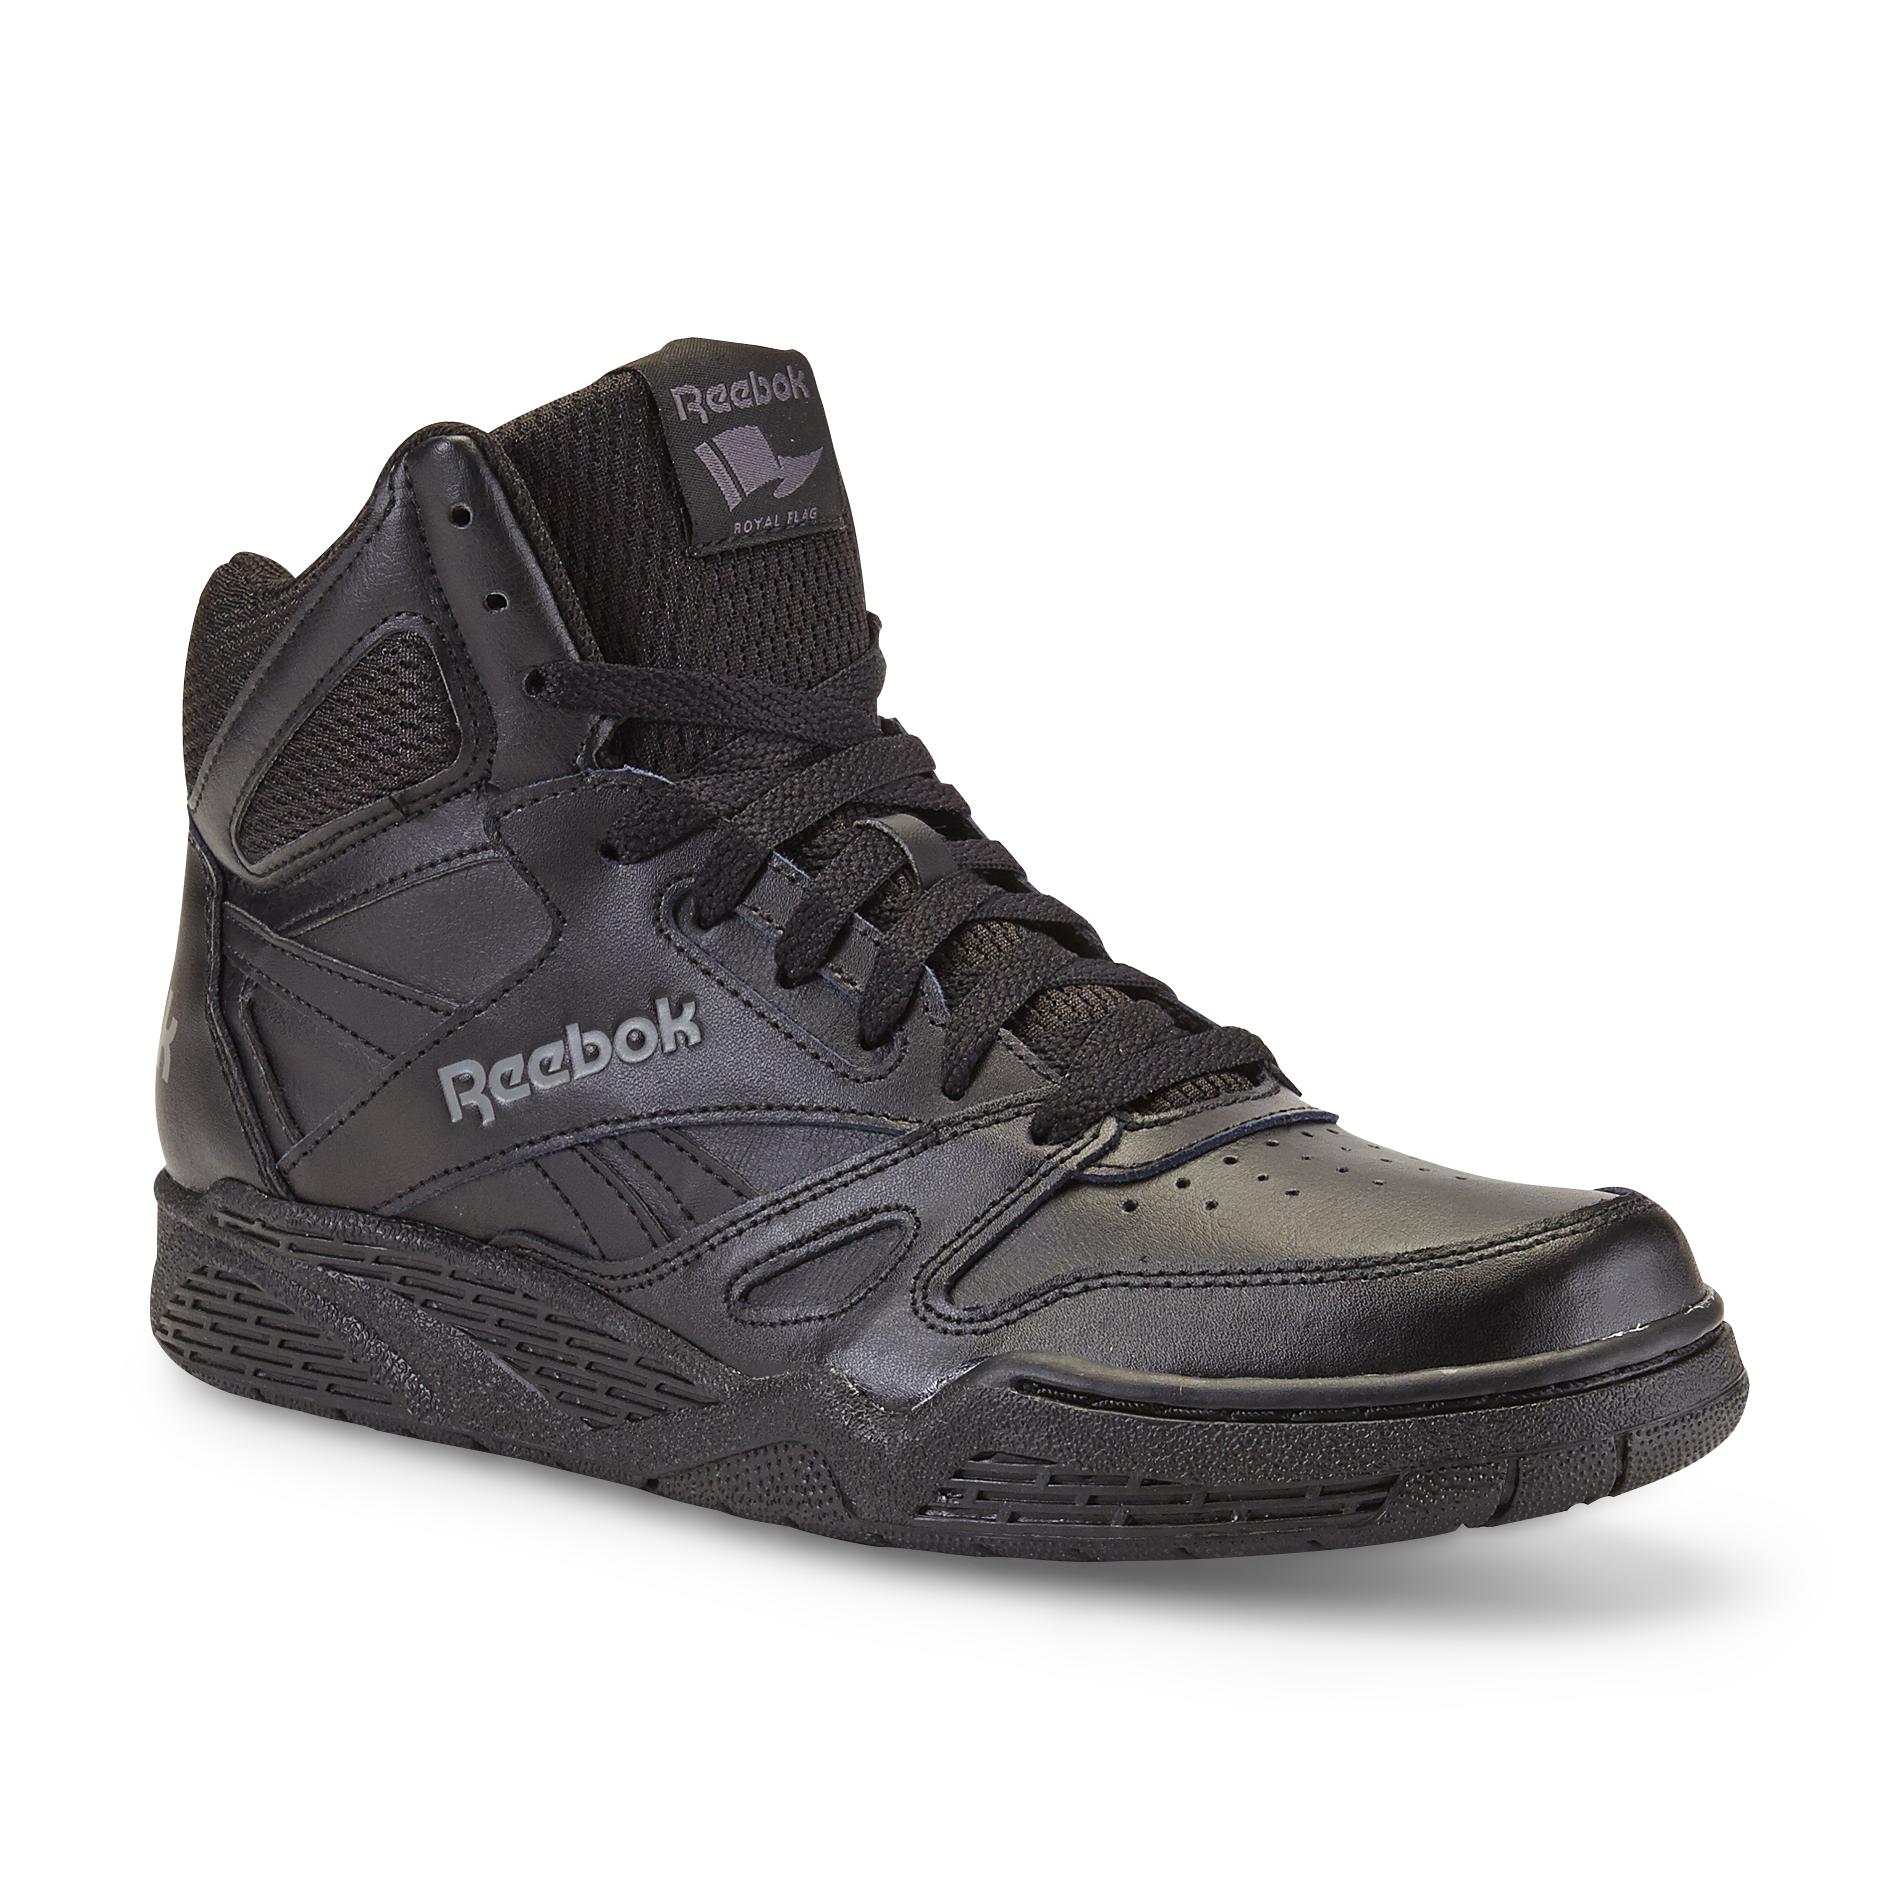 Reebok Men's Royal BB4500 Leather High-Top Basketball Shoe - Black ...